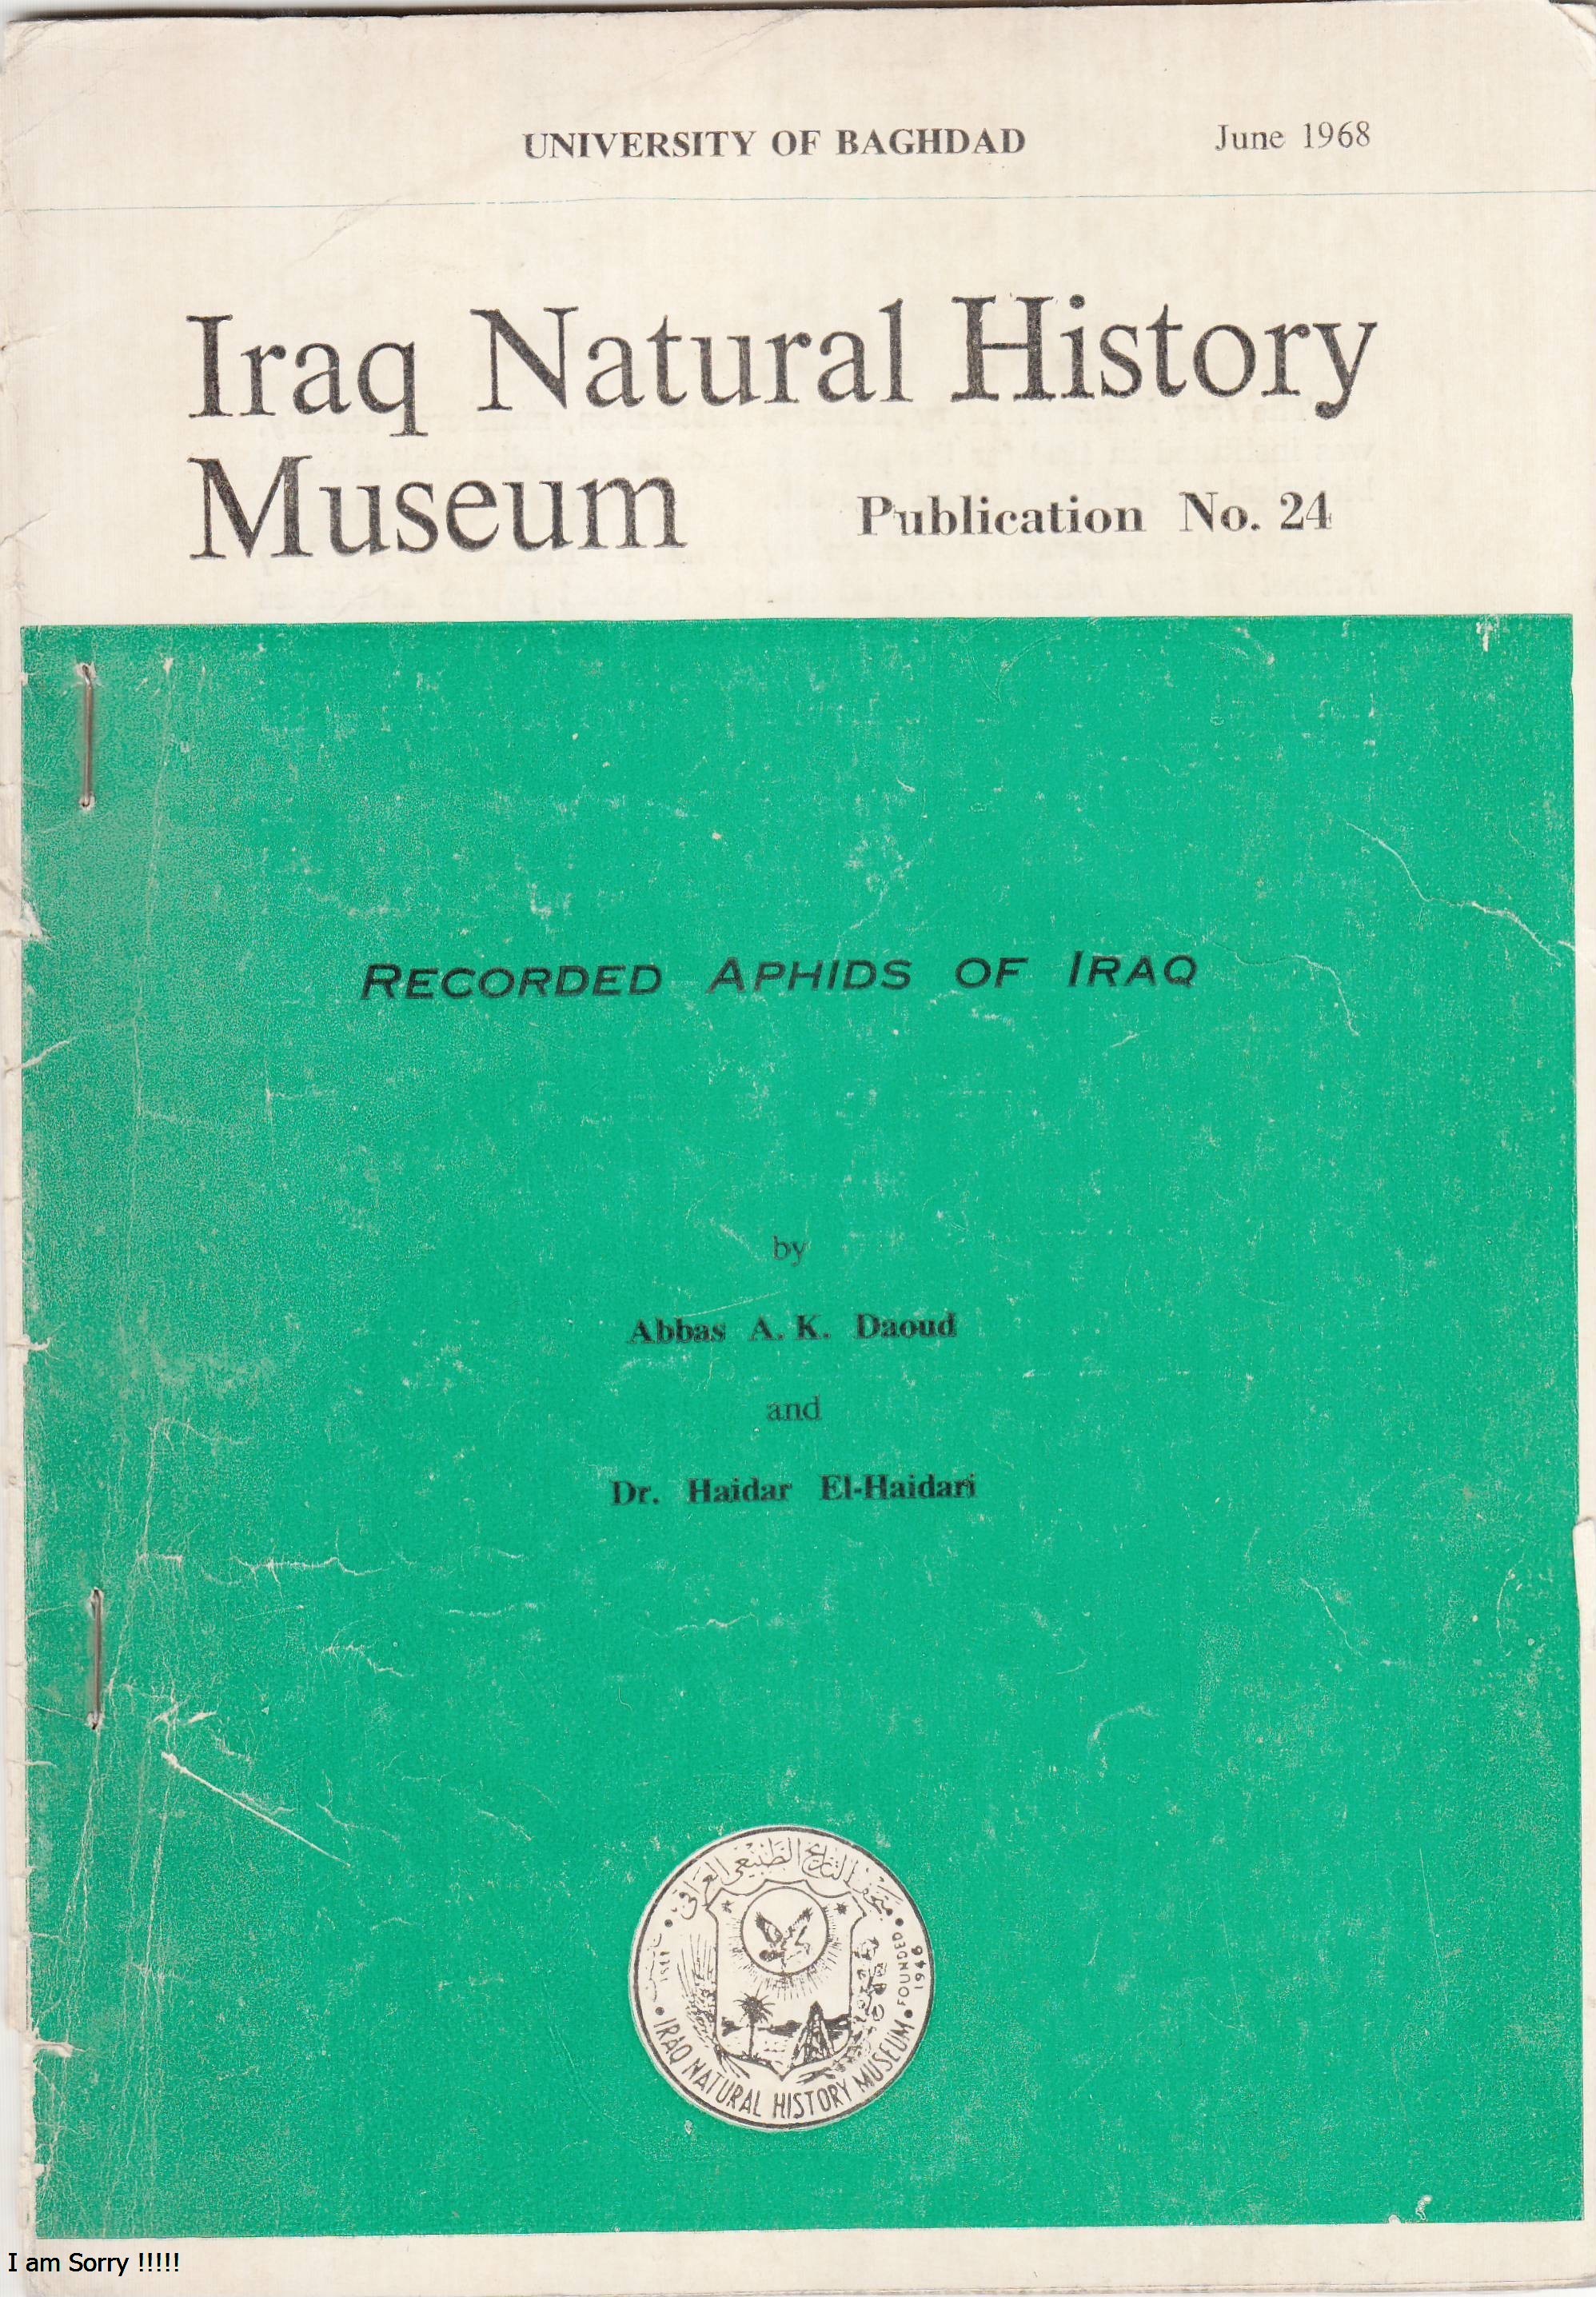 					View No. 24 (1968): Recorded Aphids of Iraq by ABBAS A. K. DAOUD AND DR. HAIDAR EL-HAIDARI , Iraq Nat.Hist. Mus, Baghdad, Iraq
				